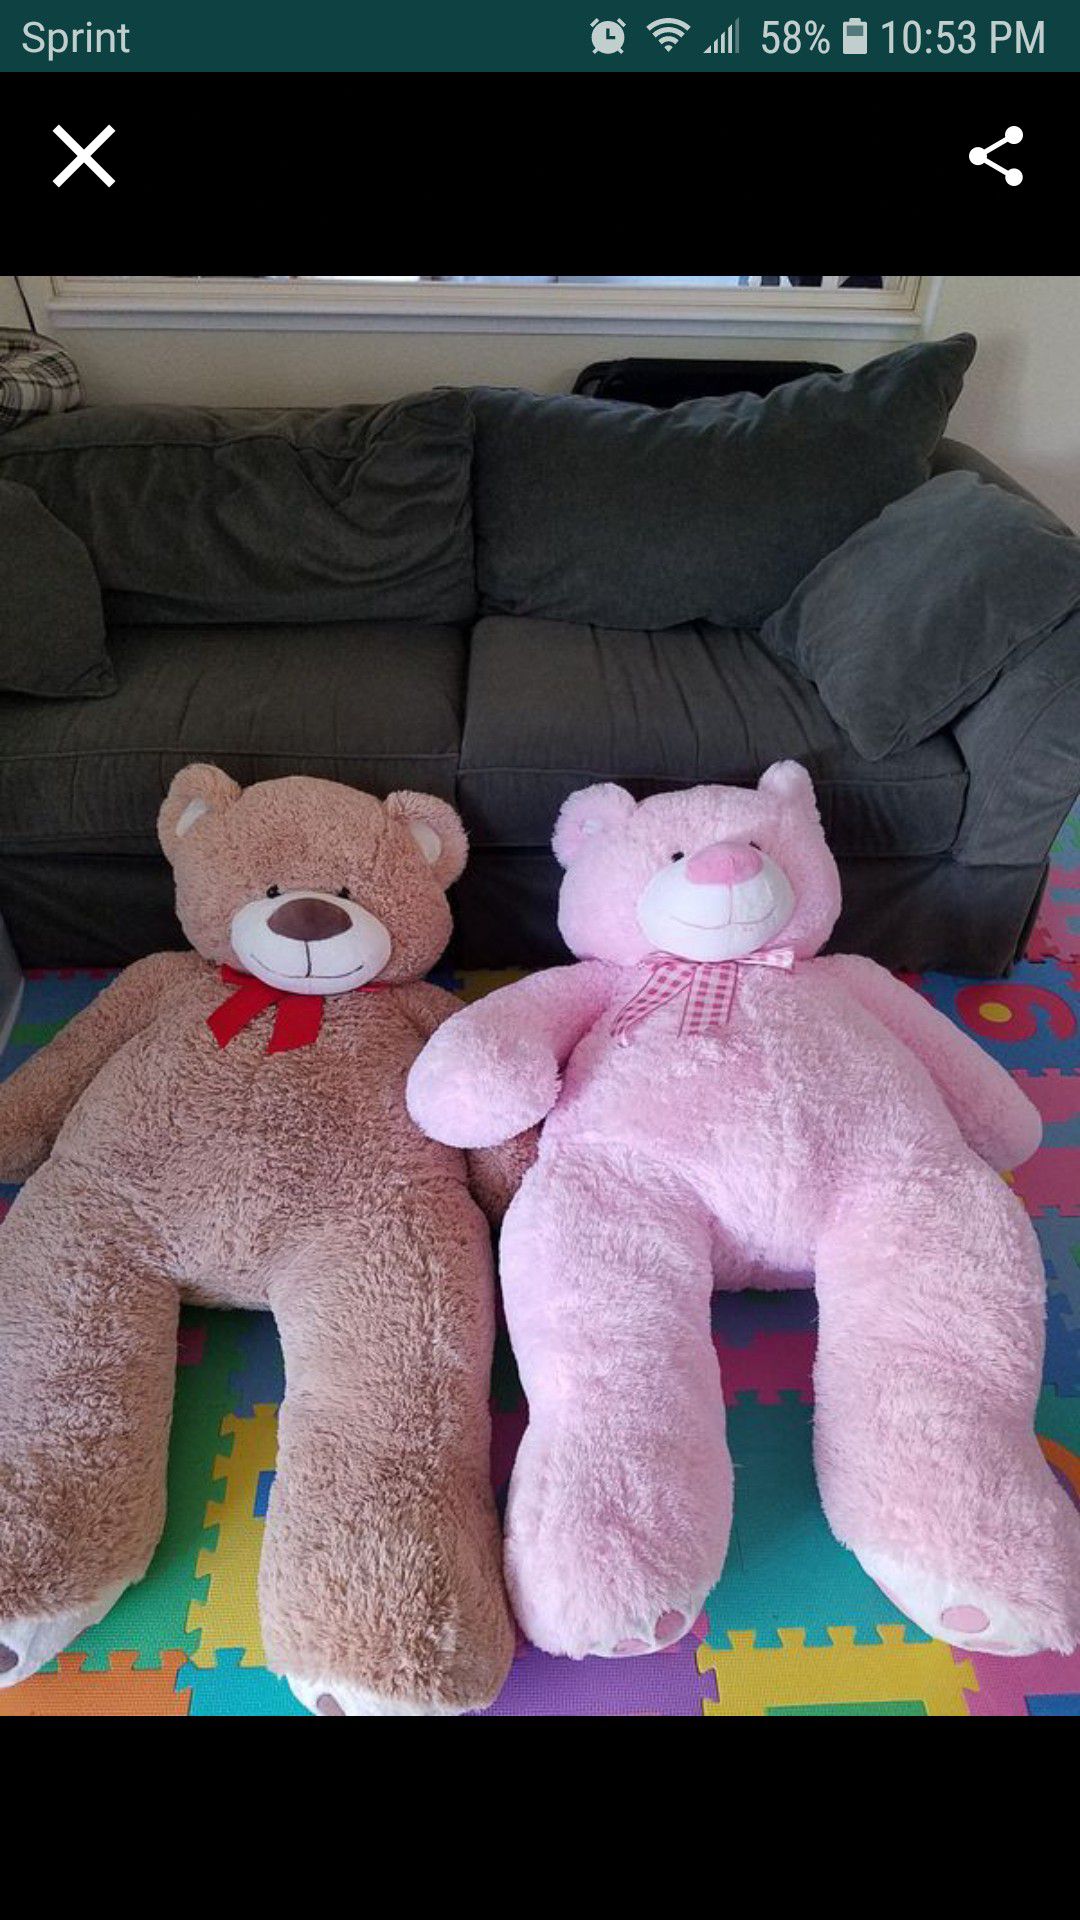 2 x 4 ft stuffed teddy bears